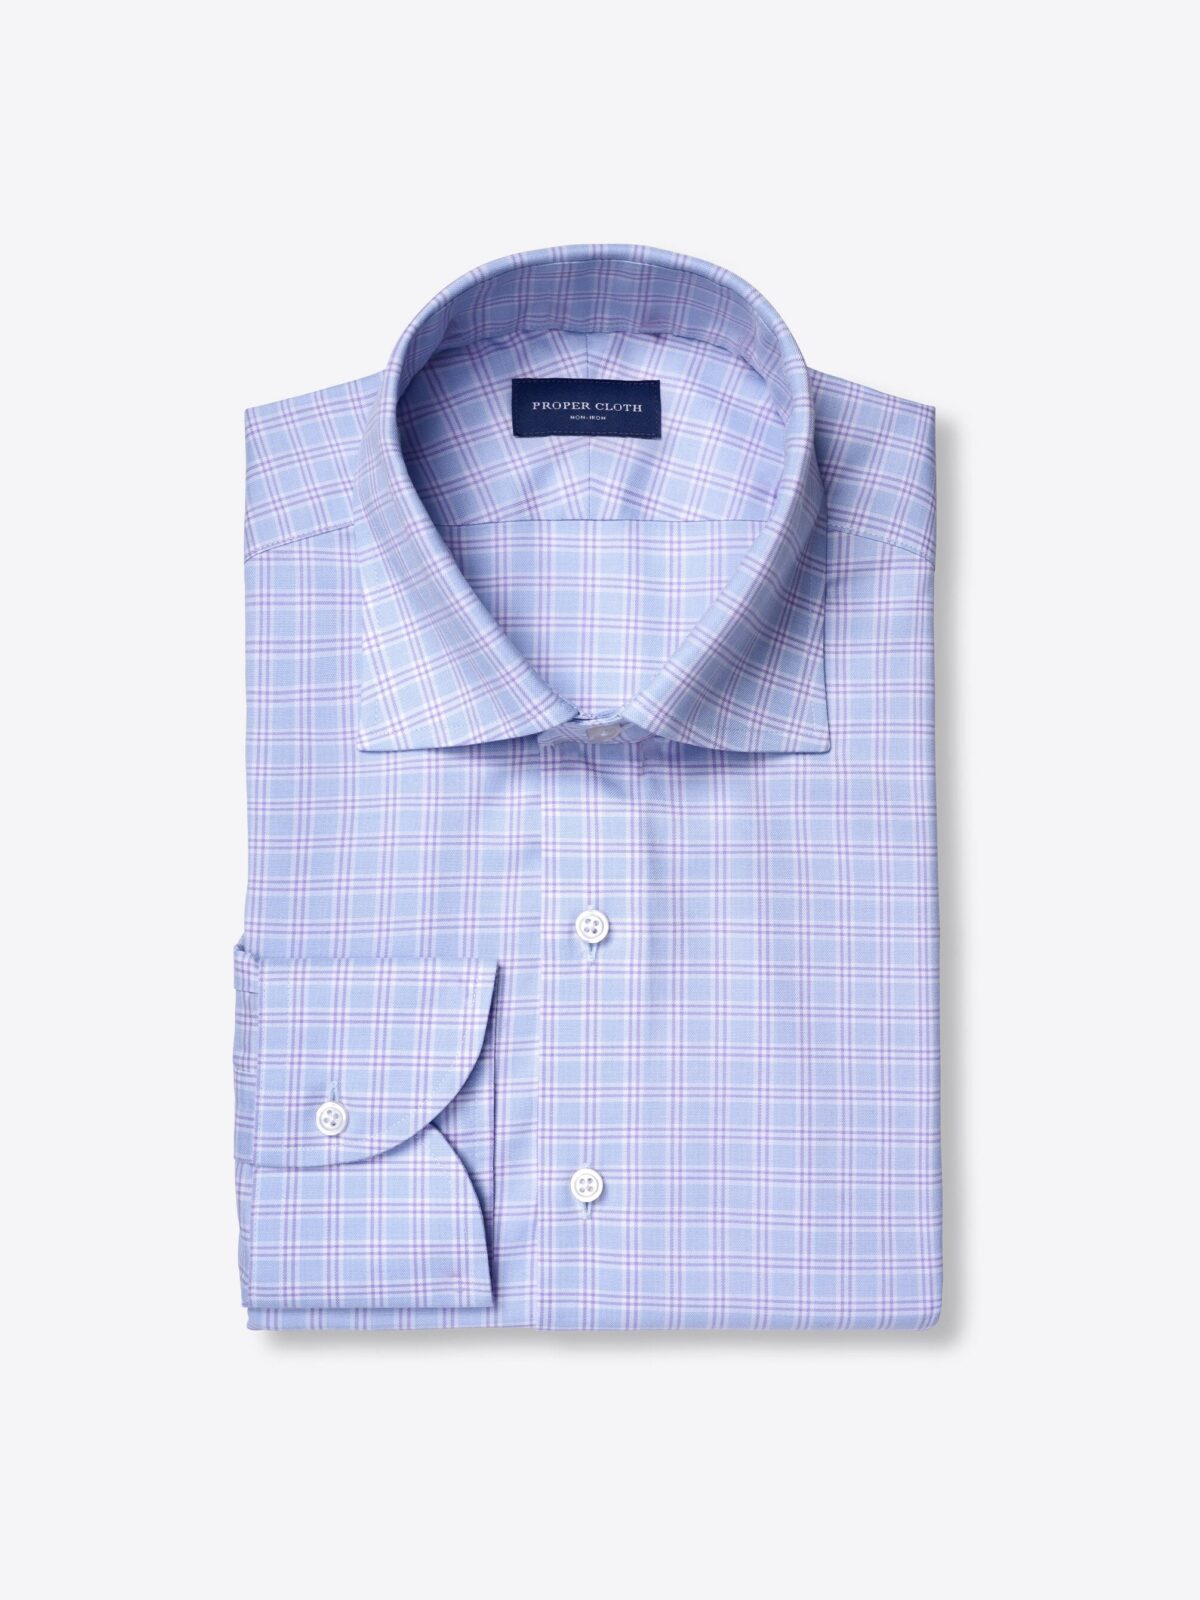 Non-Iron Stretch Light Blue and Lavender Multi Check Shirt by Proper Cloth